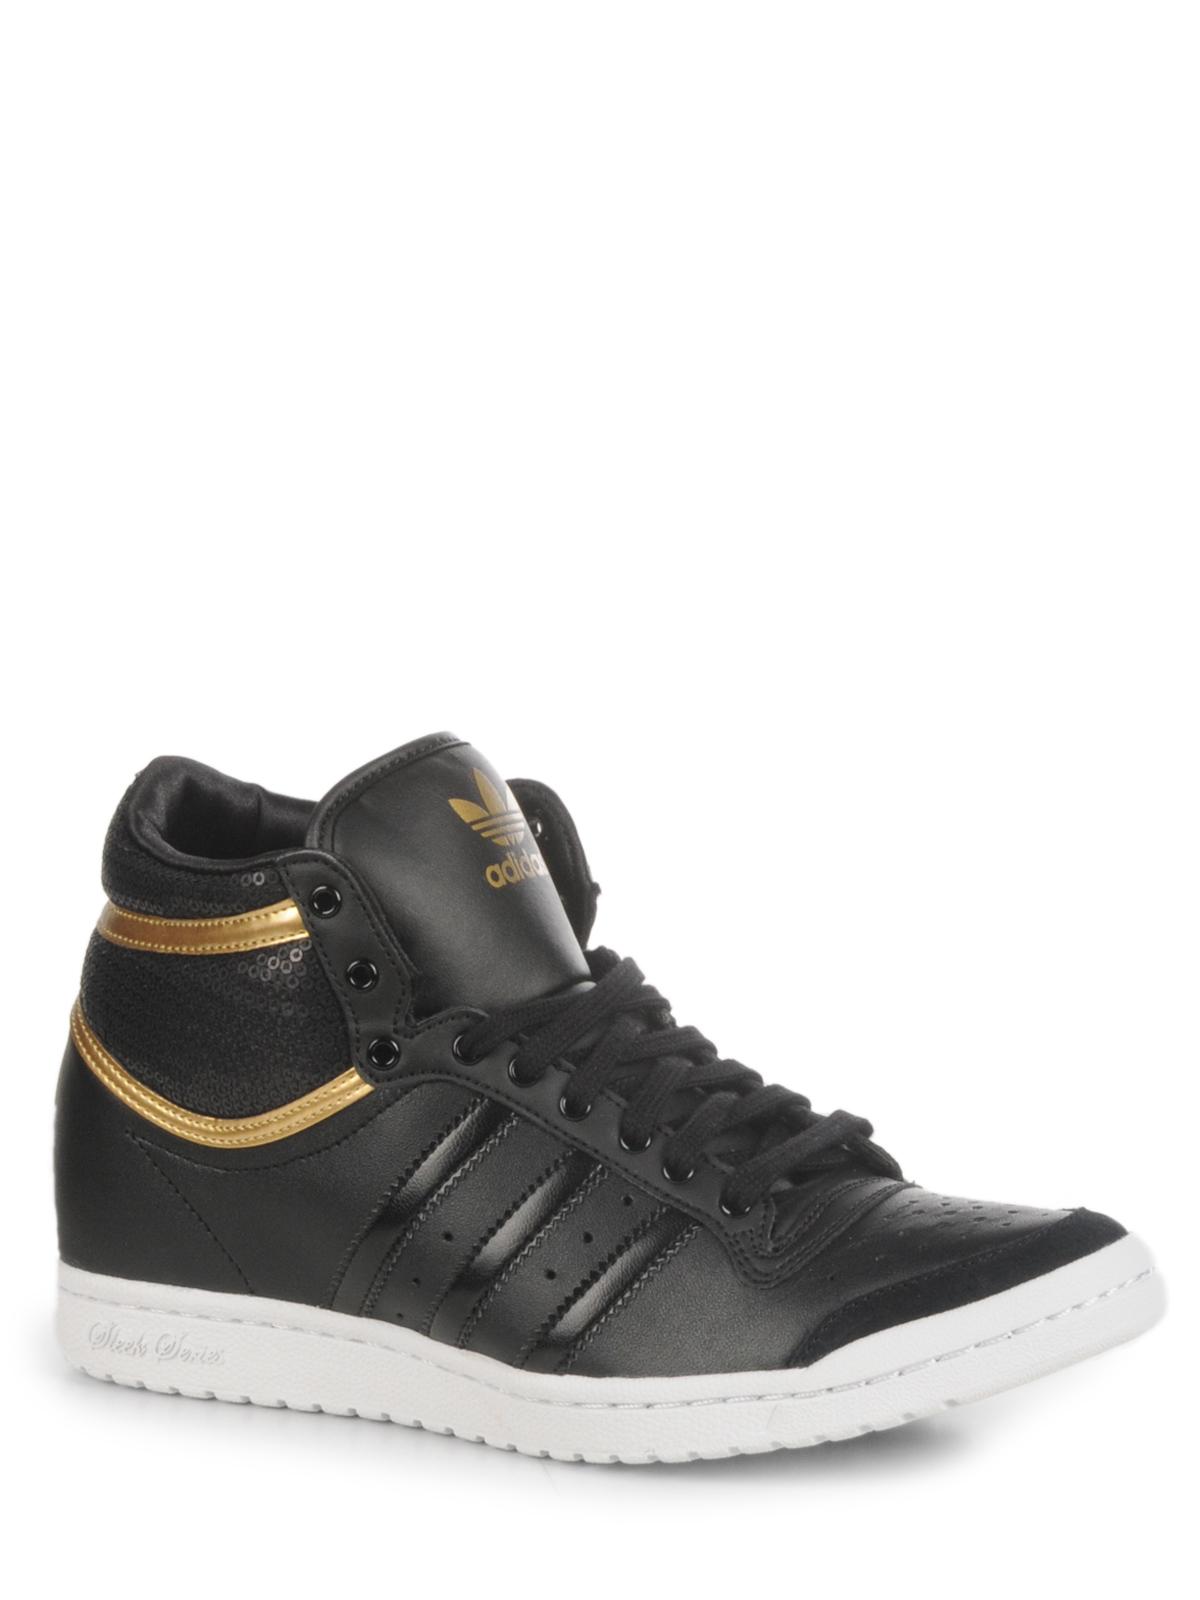 Foto Adidas Top Ten Hi Sleek W deportivas negro/negro/dorado metálico EU: 40 foto 204726